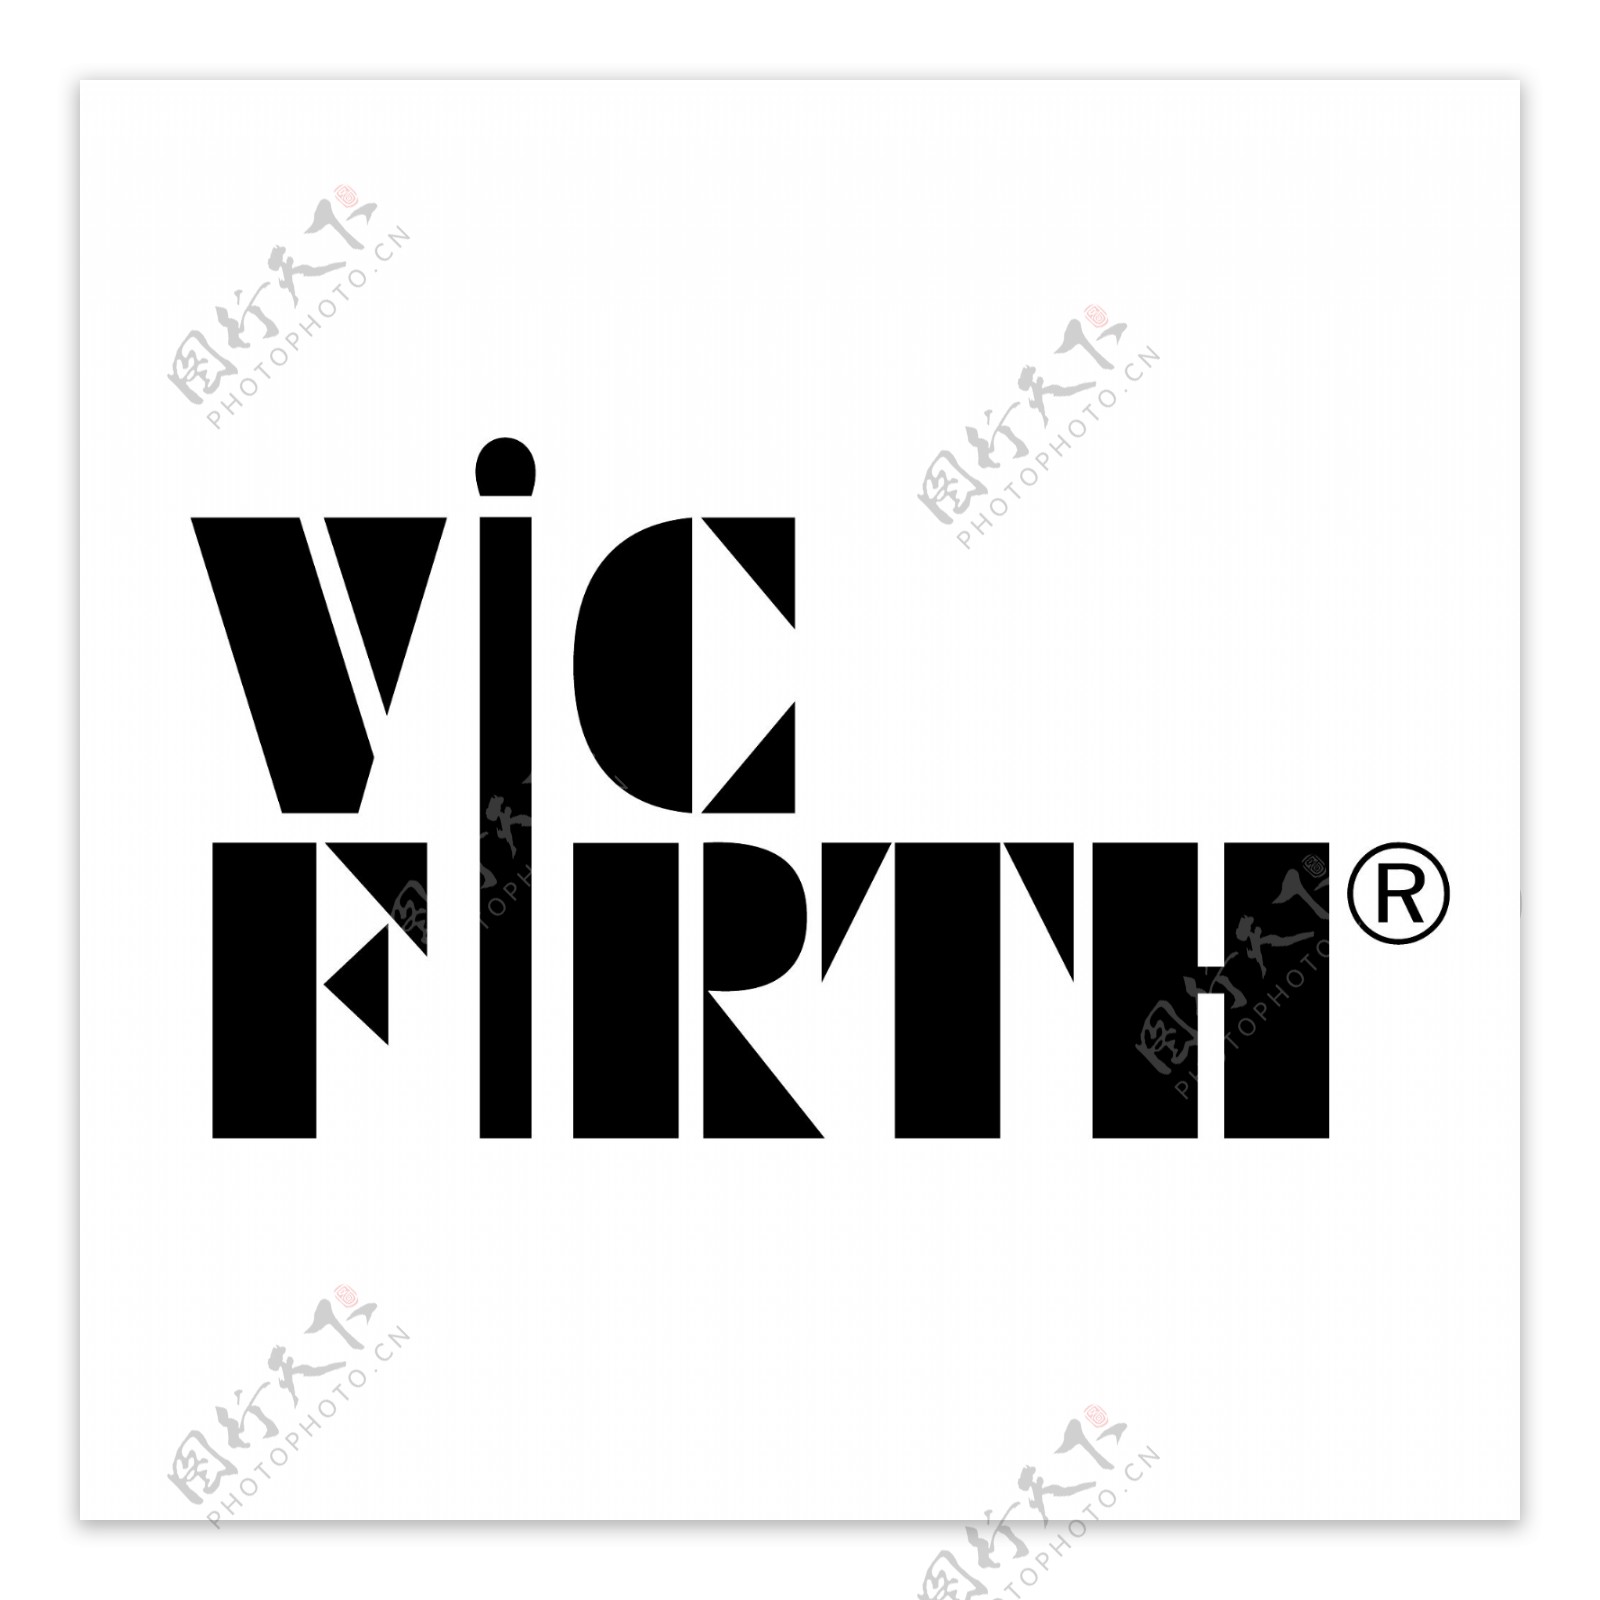 VicFirth